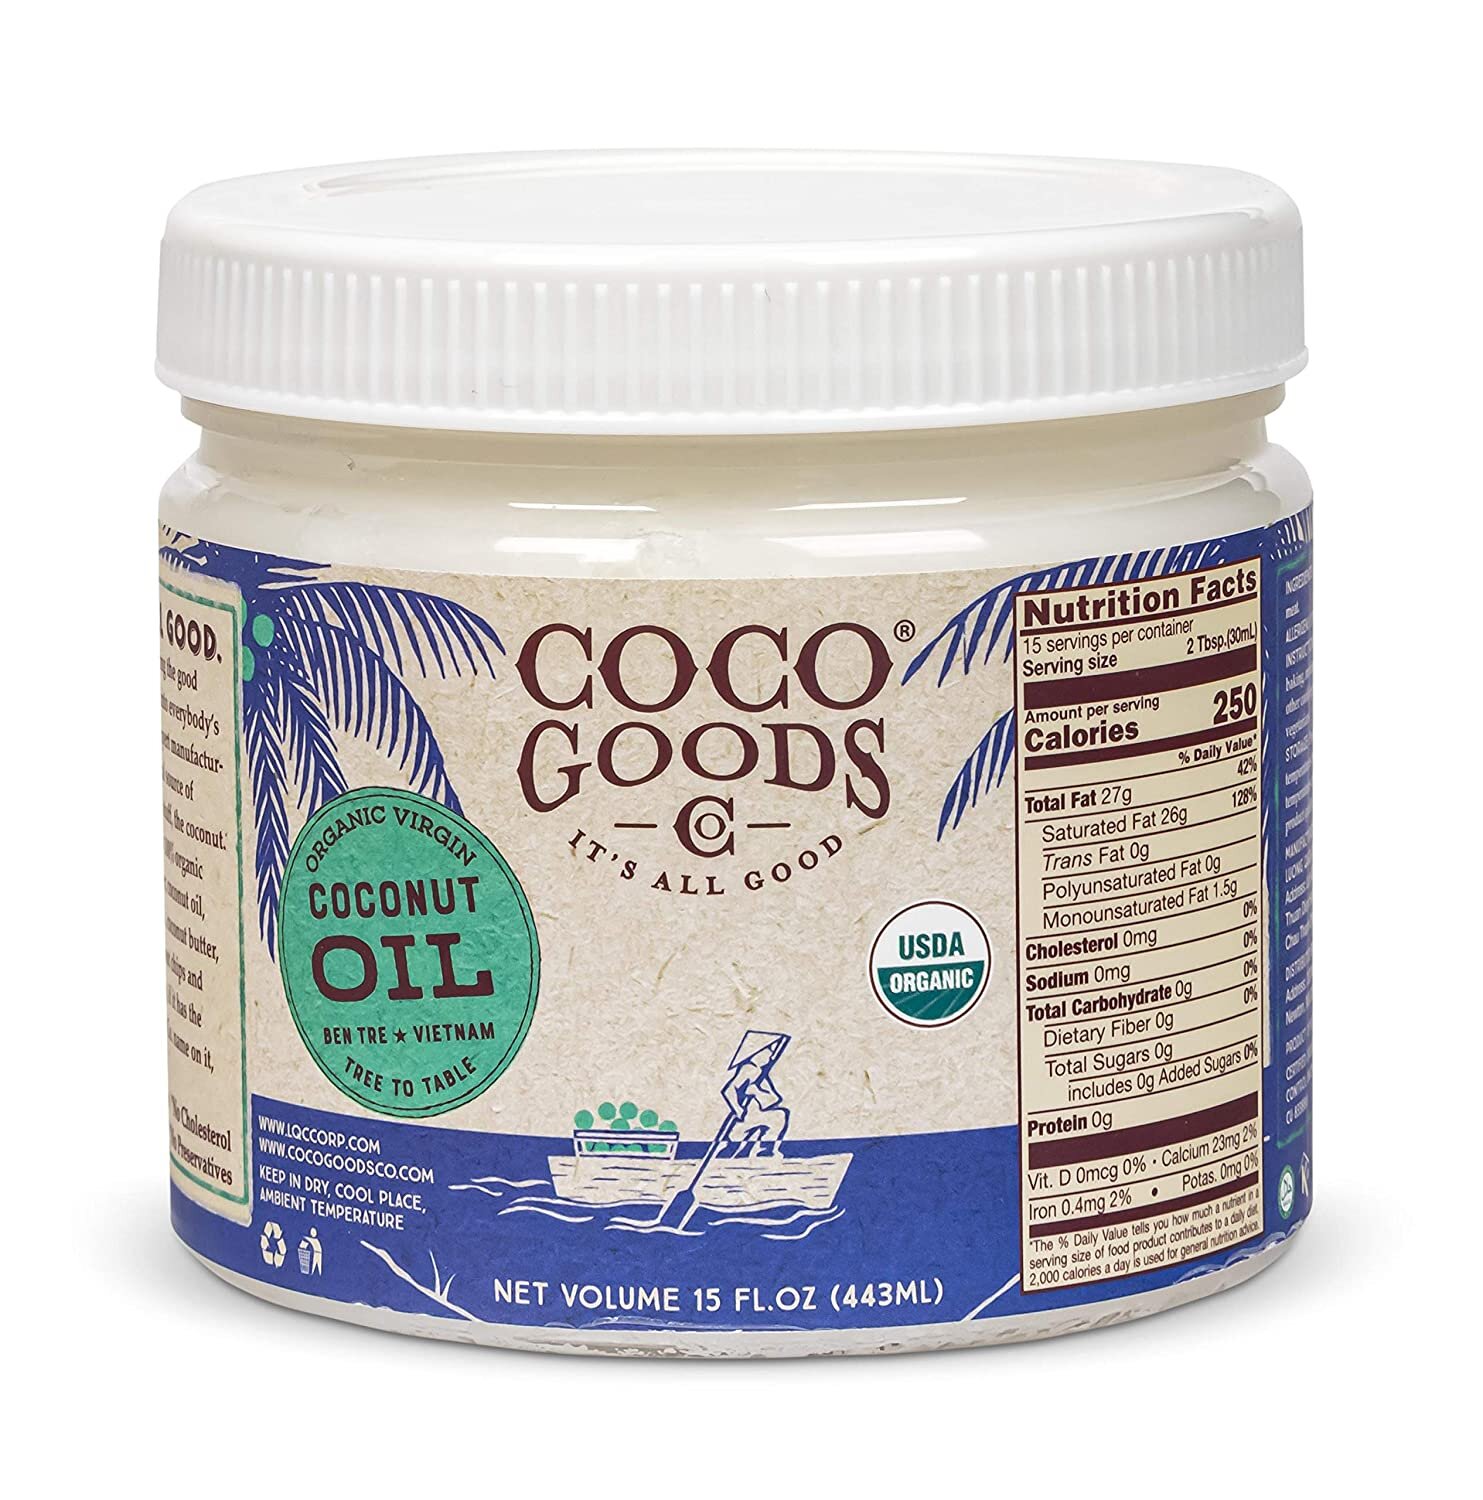 Cocogoods Coconut Oil